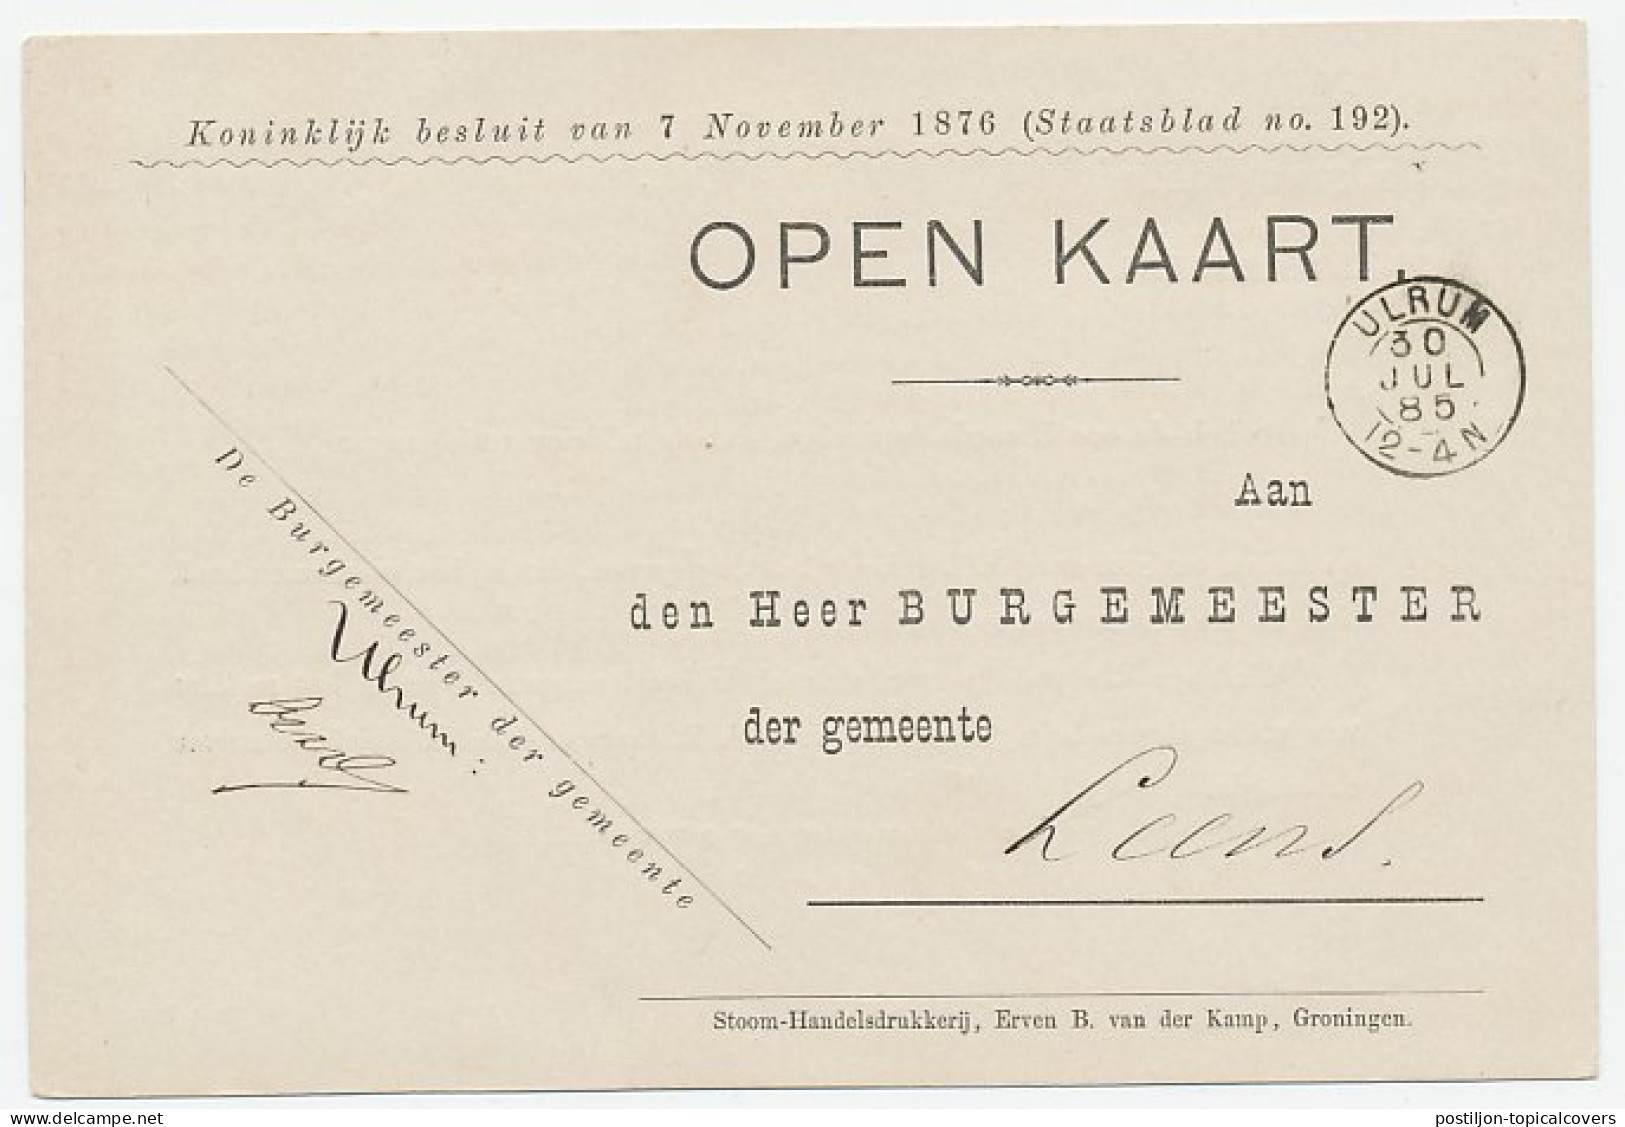 Kleinrondstempel Ulrum 1885 - Unclassified